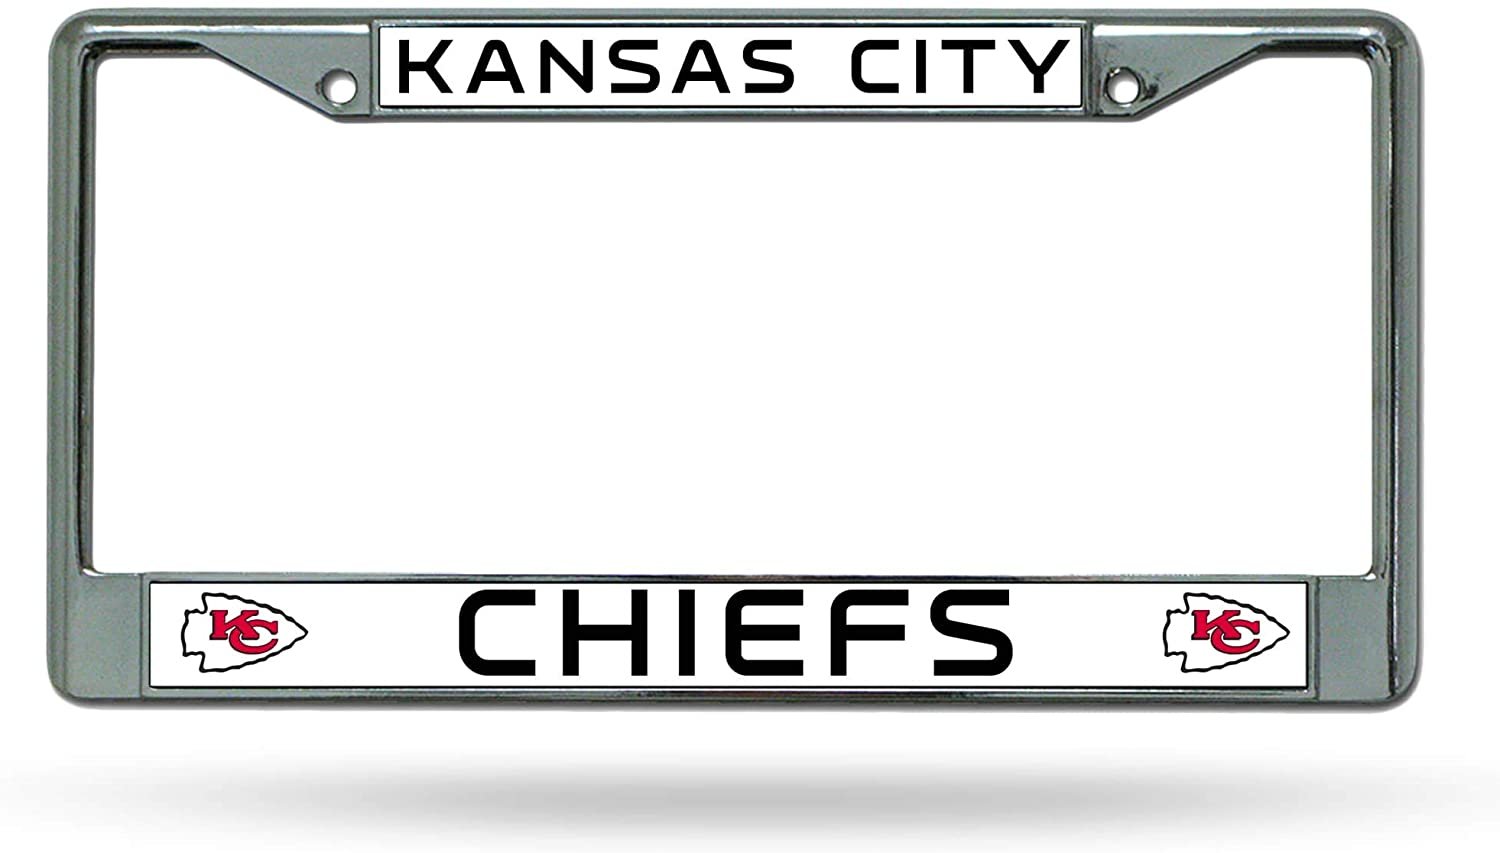 Kansas City Chiefs Premium Metal License Plate Frame Chrome Tag Cover, 12x6 Inch